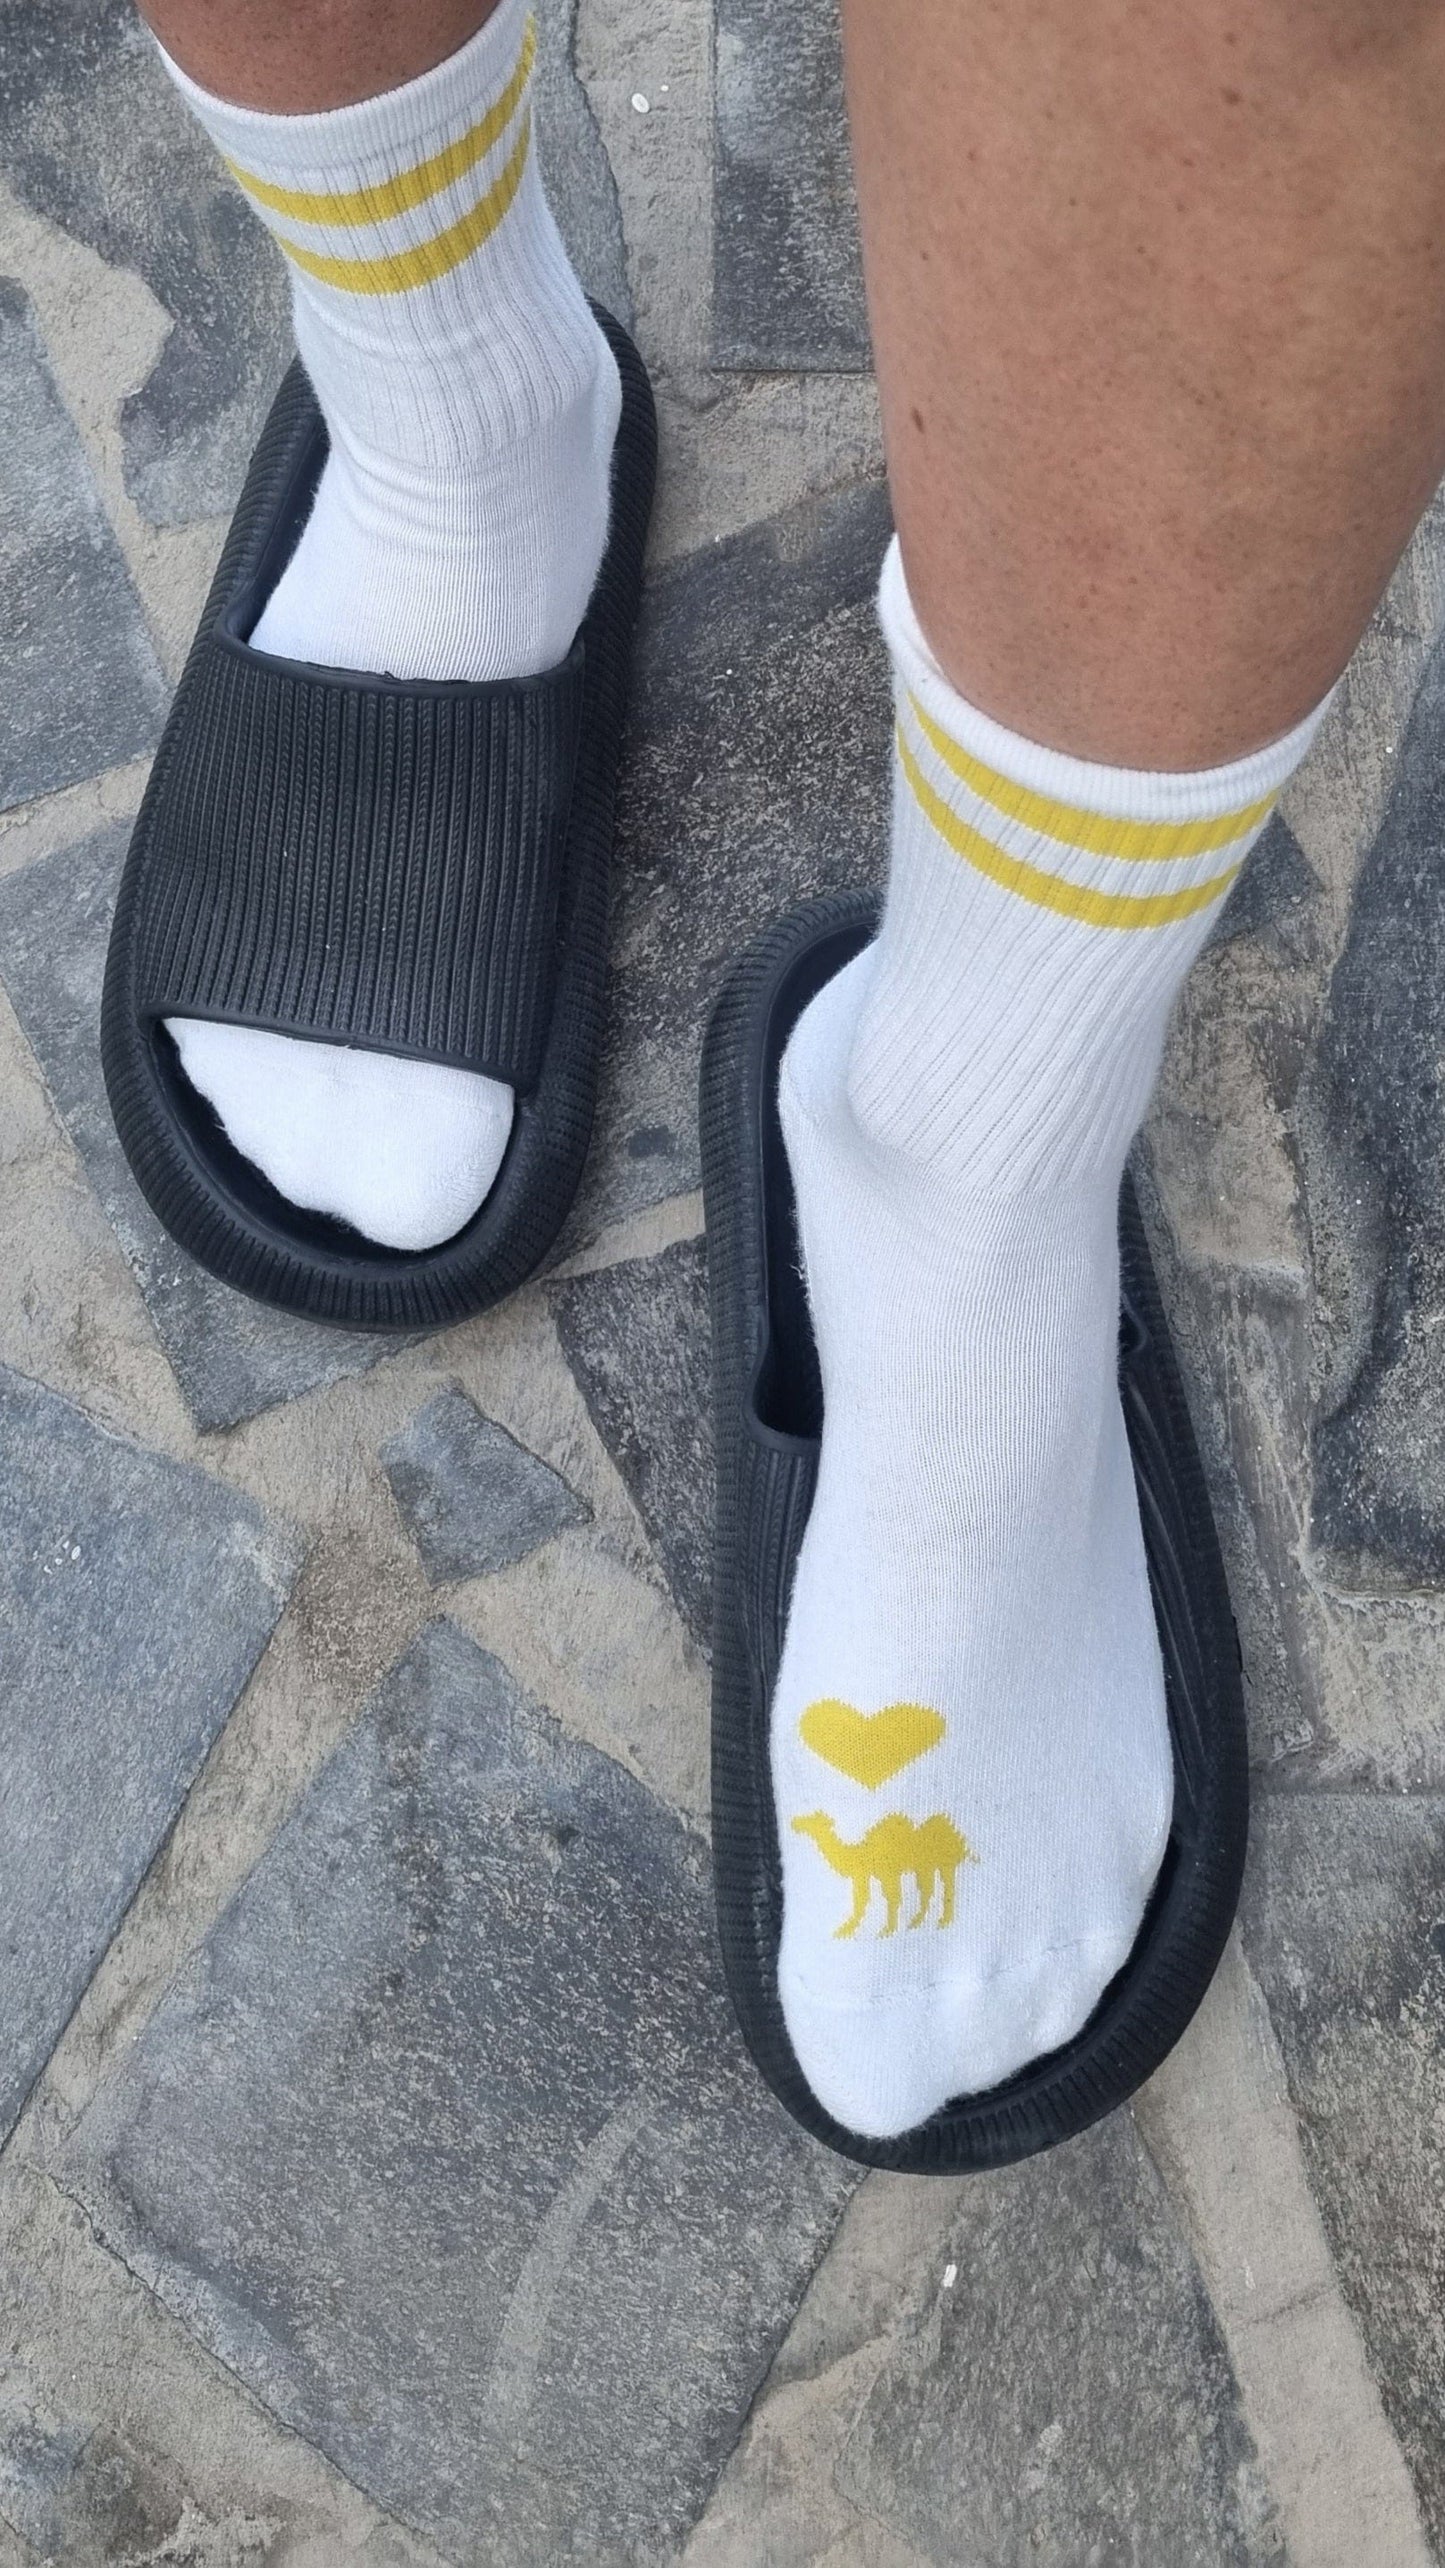 VAGPWR Socks Weidemann's Tennis sock <3 Camel toe